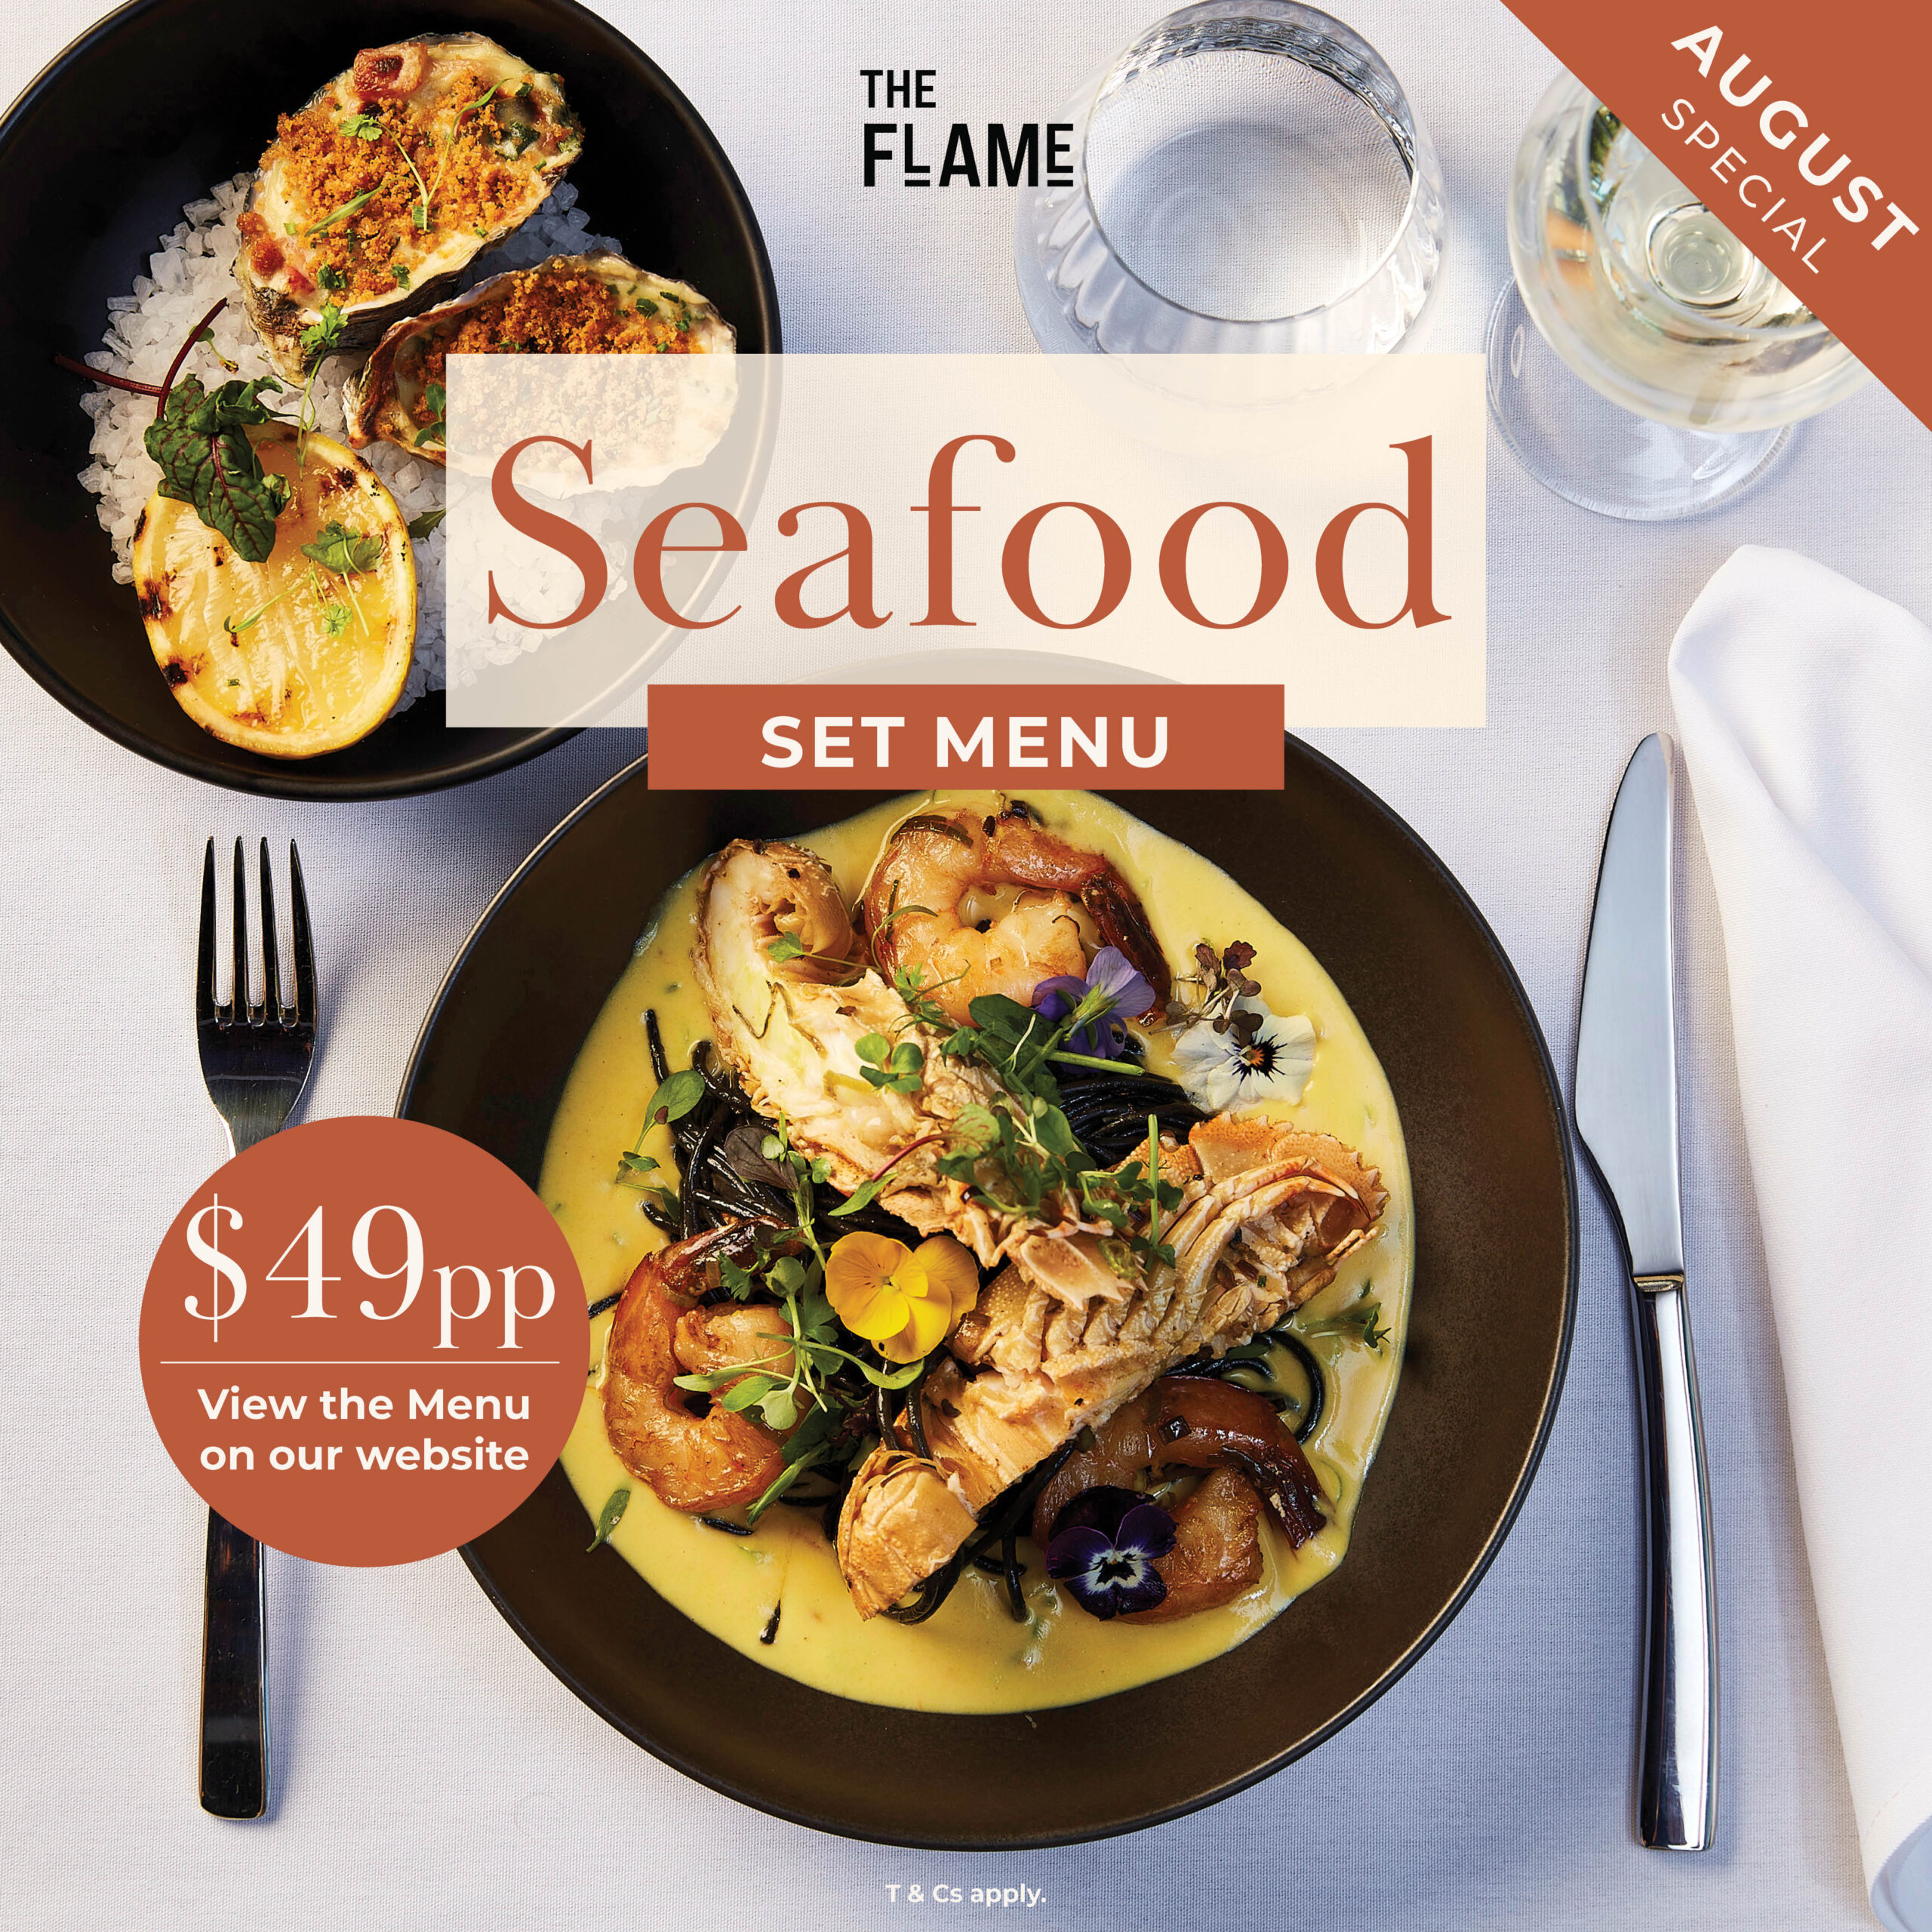 photo of $49 Seafood set menu at The Flame